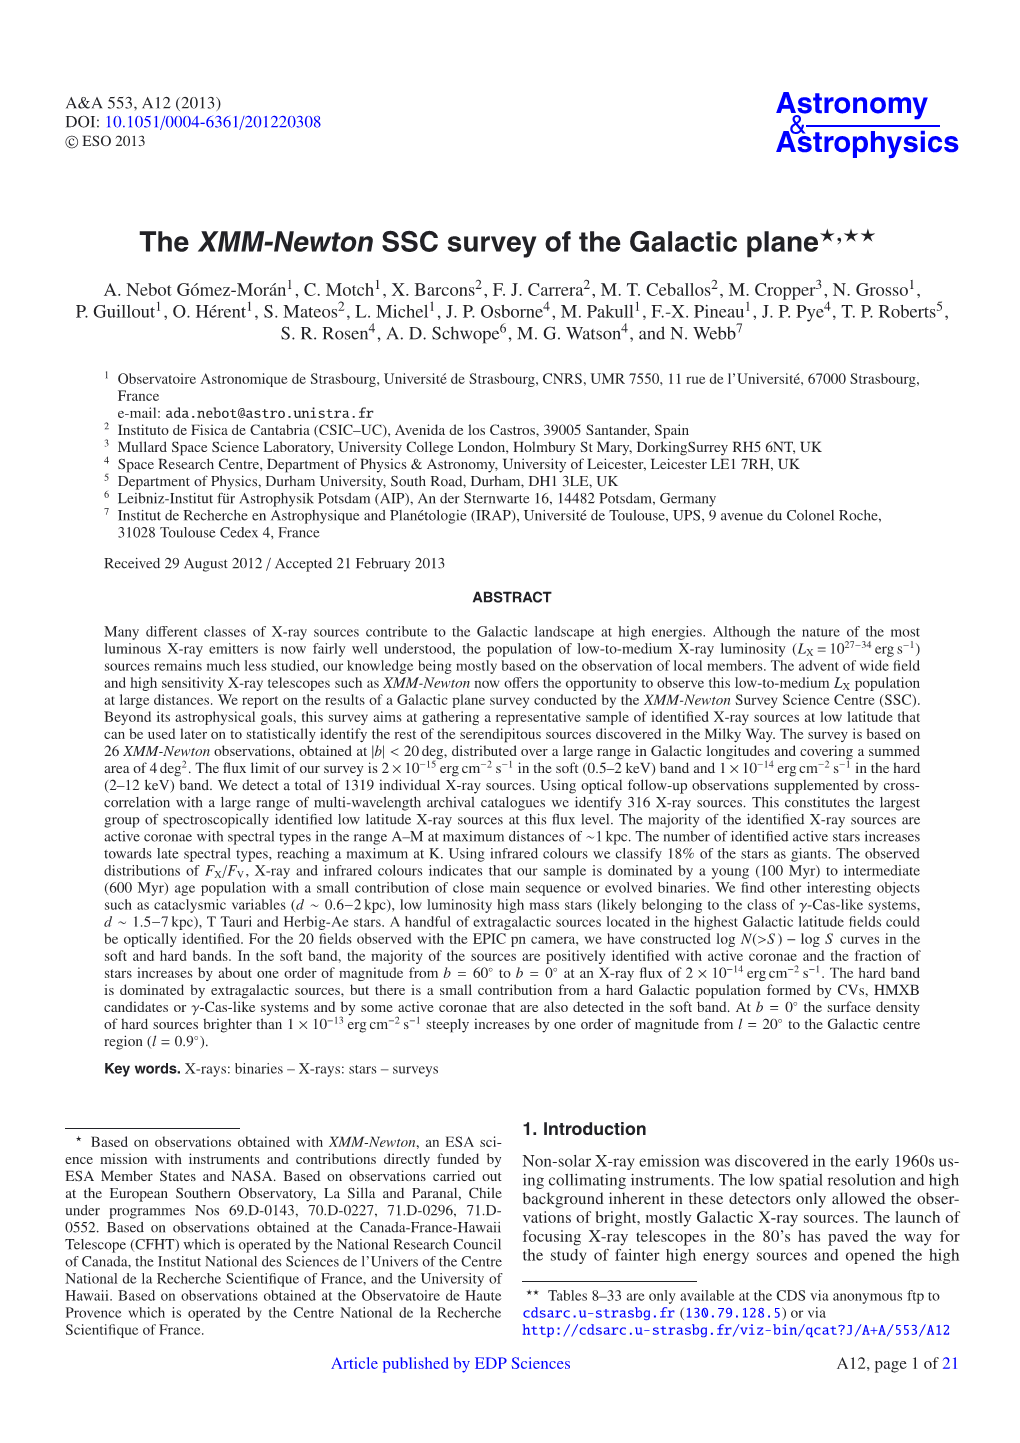 The XMM-Newton SSC Survey of the Galactic Plane�,